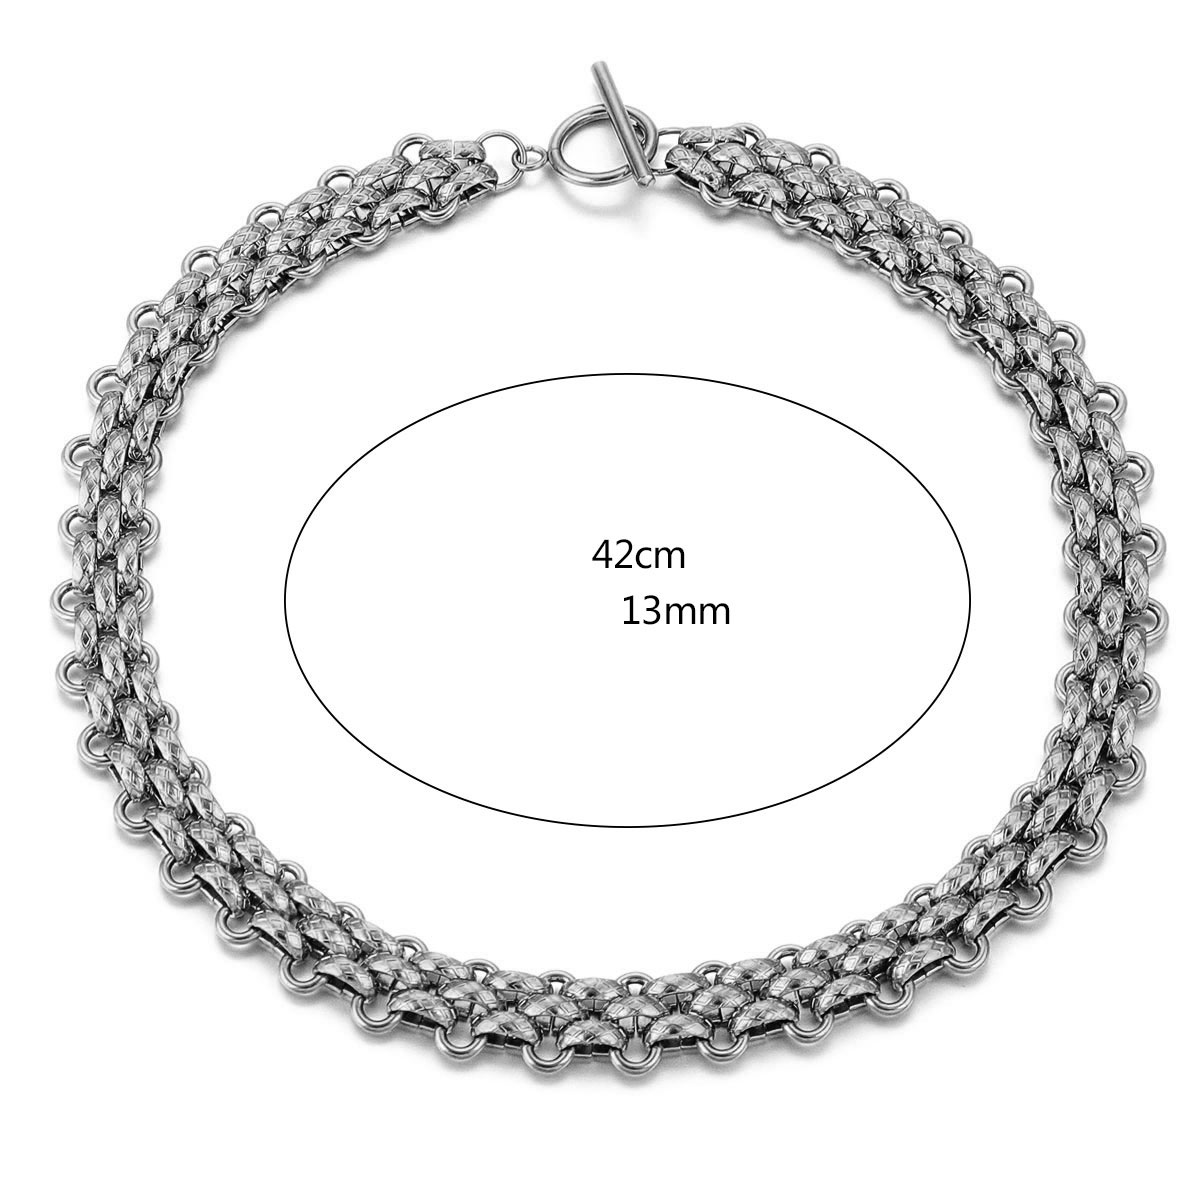 4:Texture Necklace - Steel Color